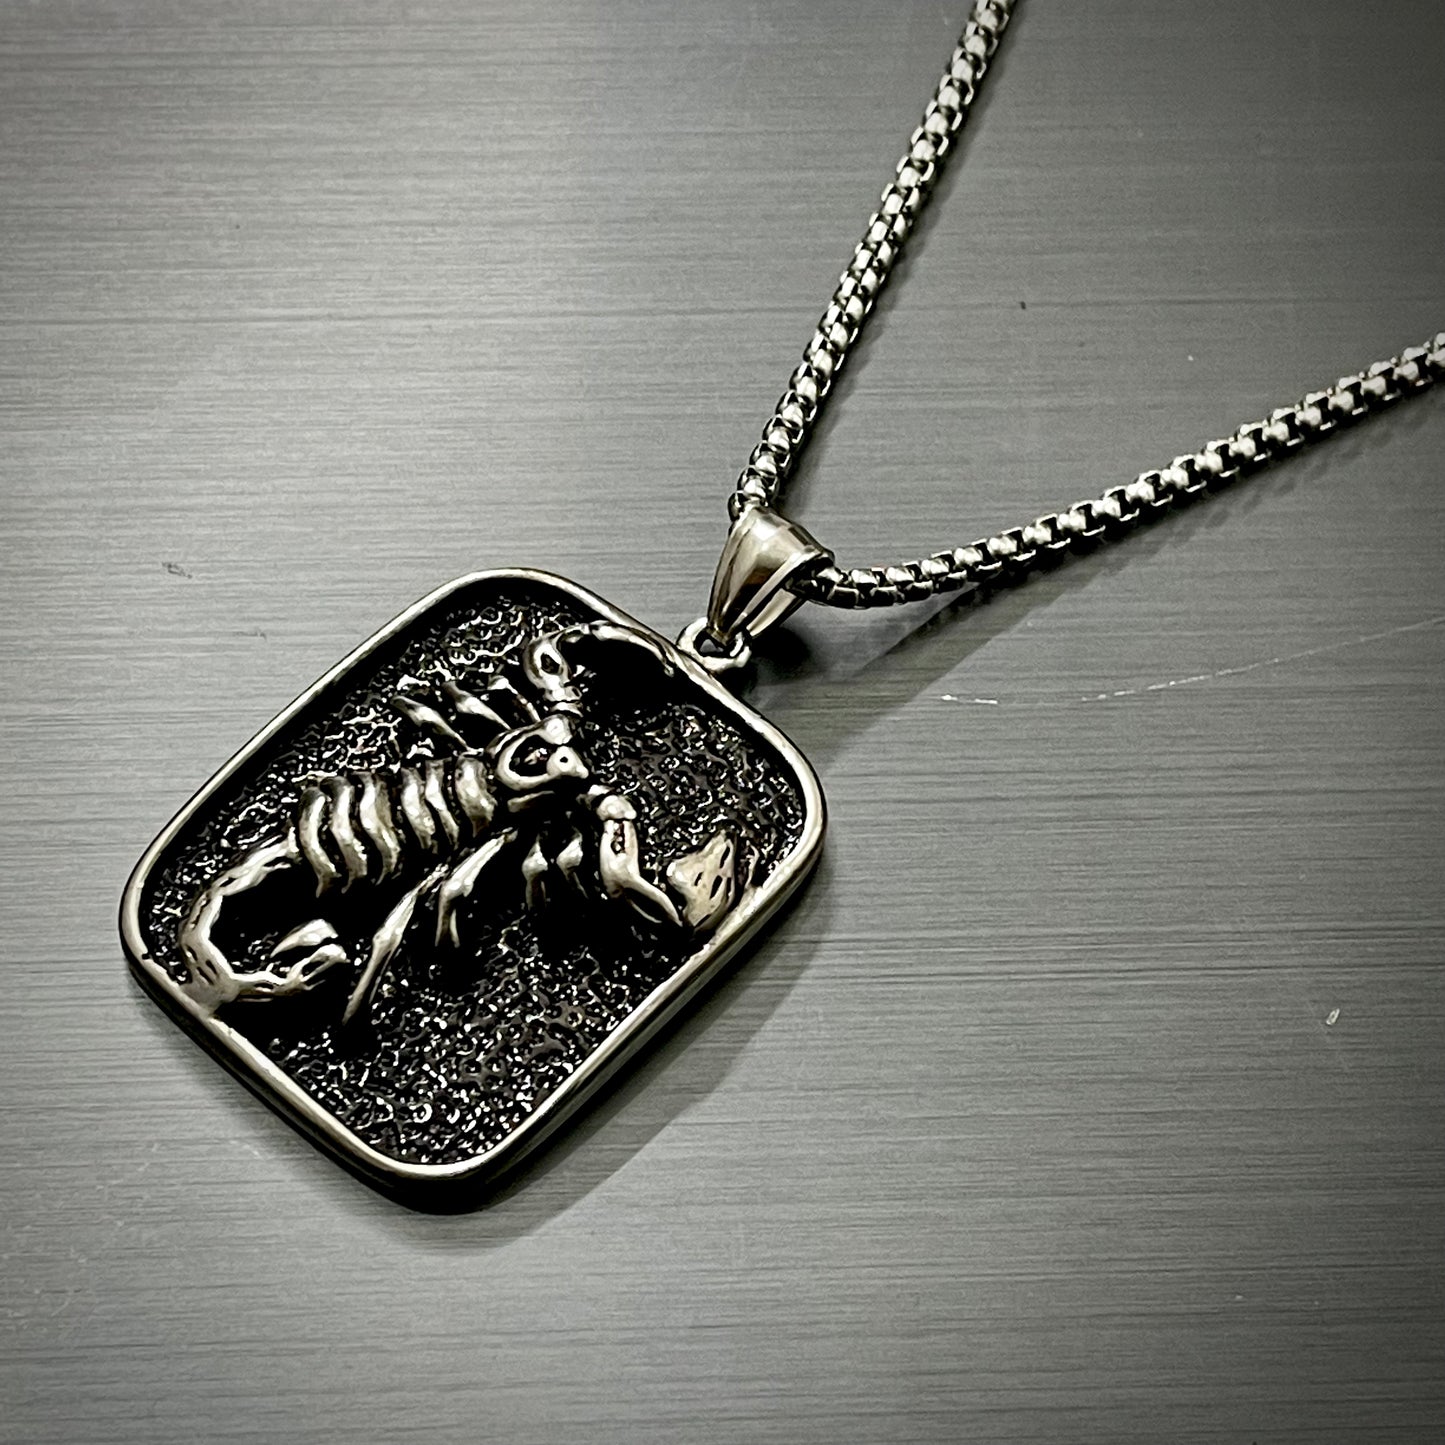 scorpio dog tag pendant necklace for men in pakistan